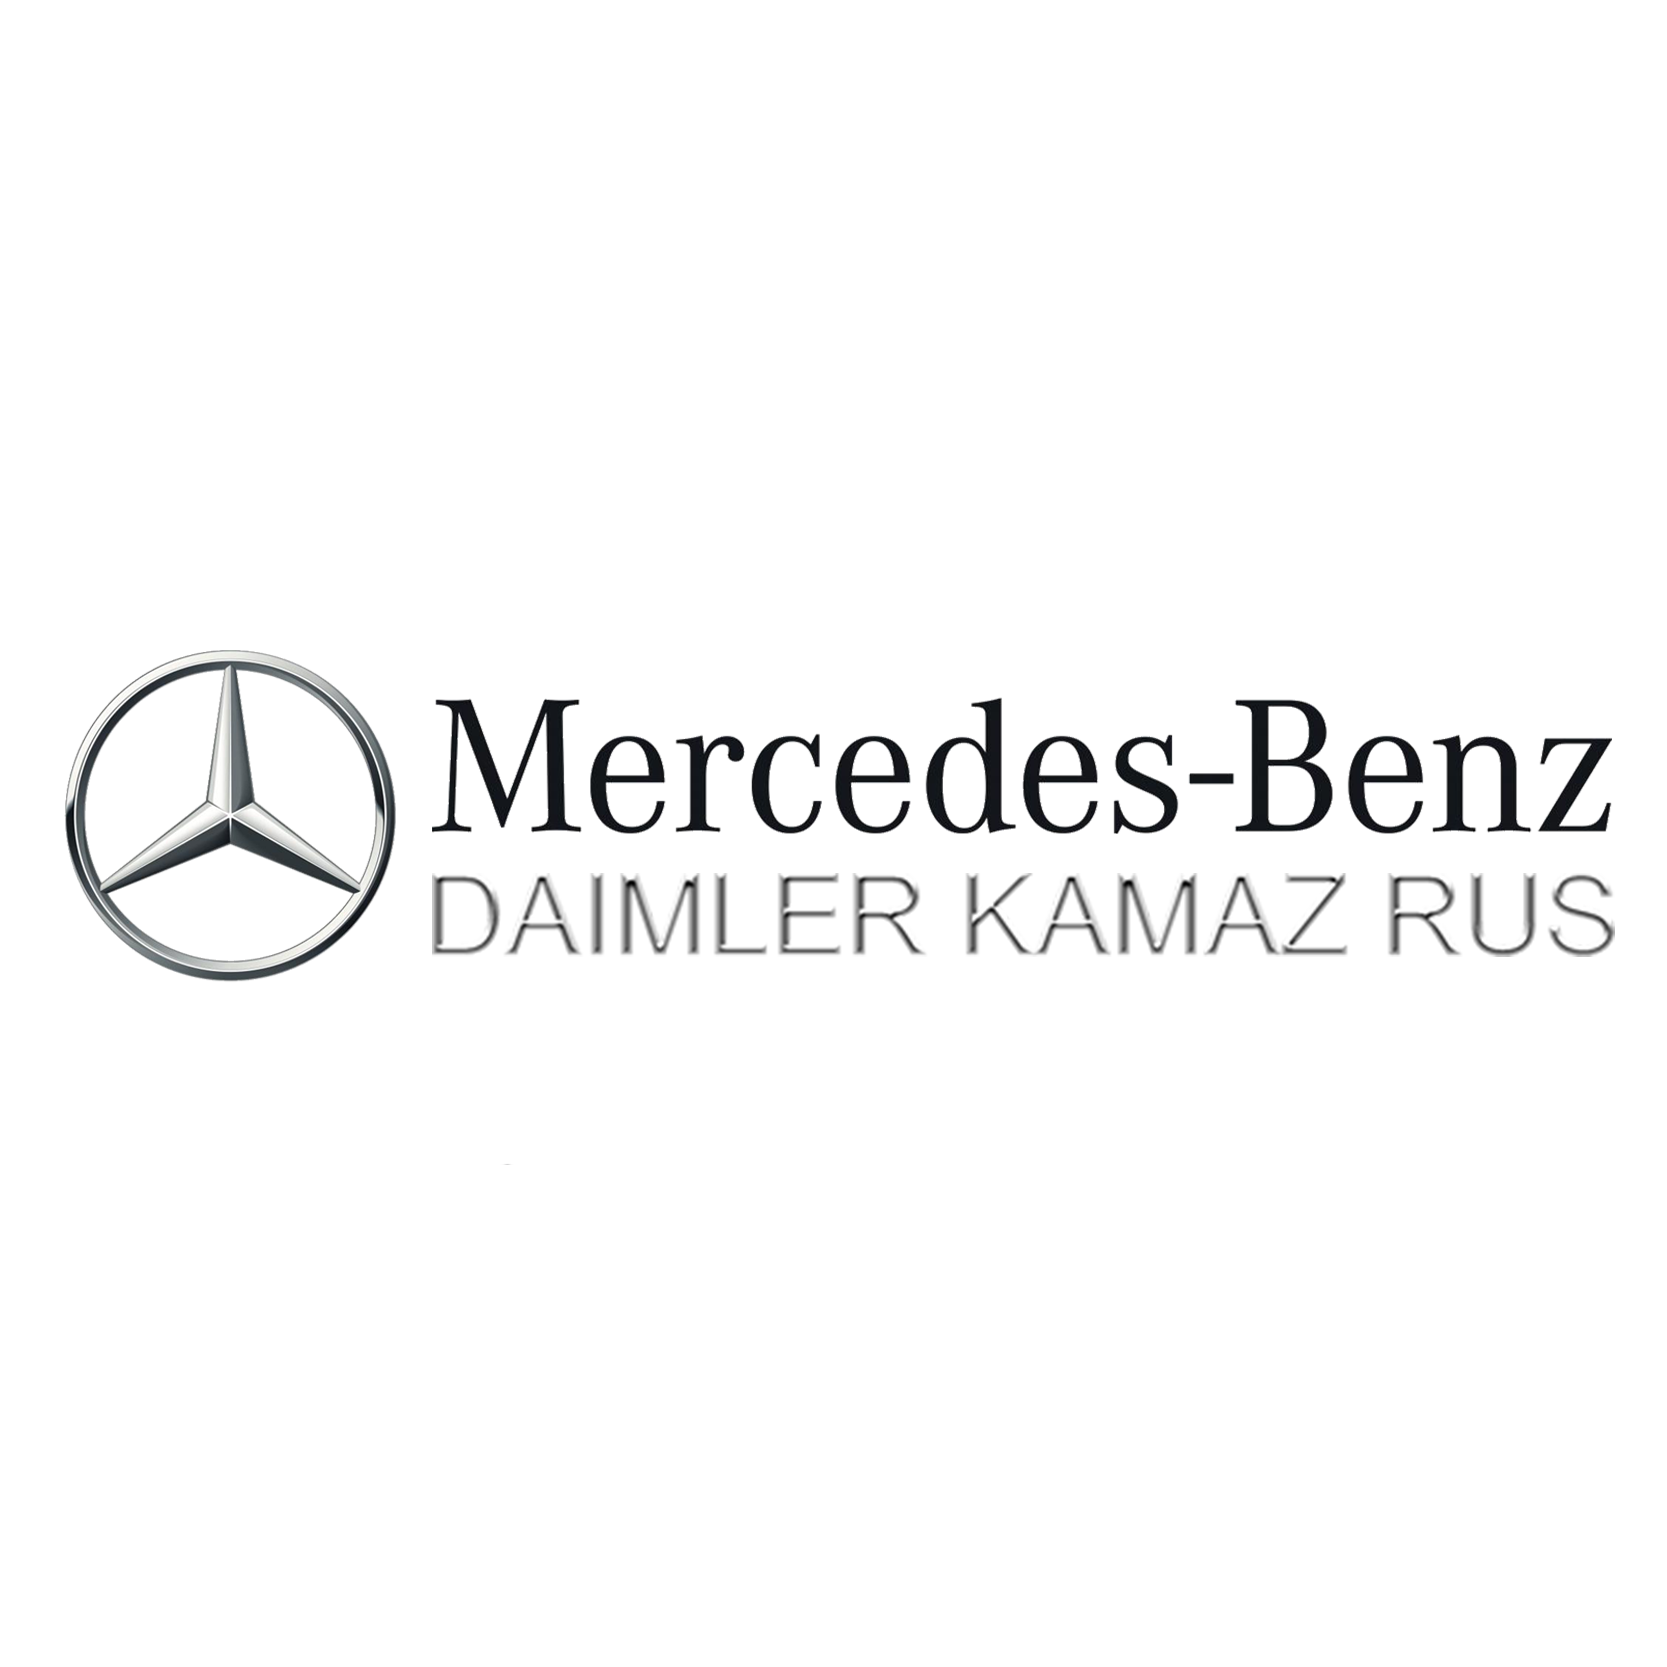 Daimler Kamaz Rus